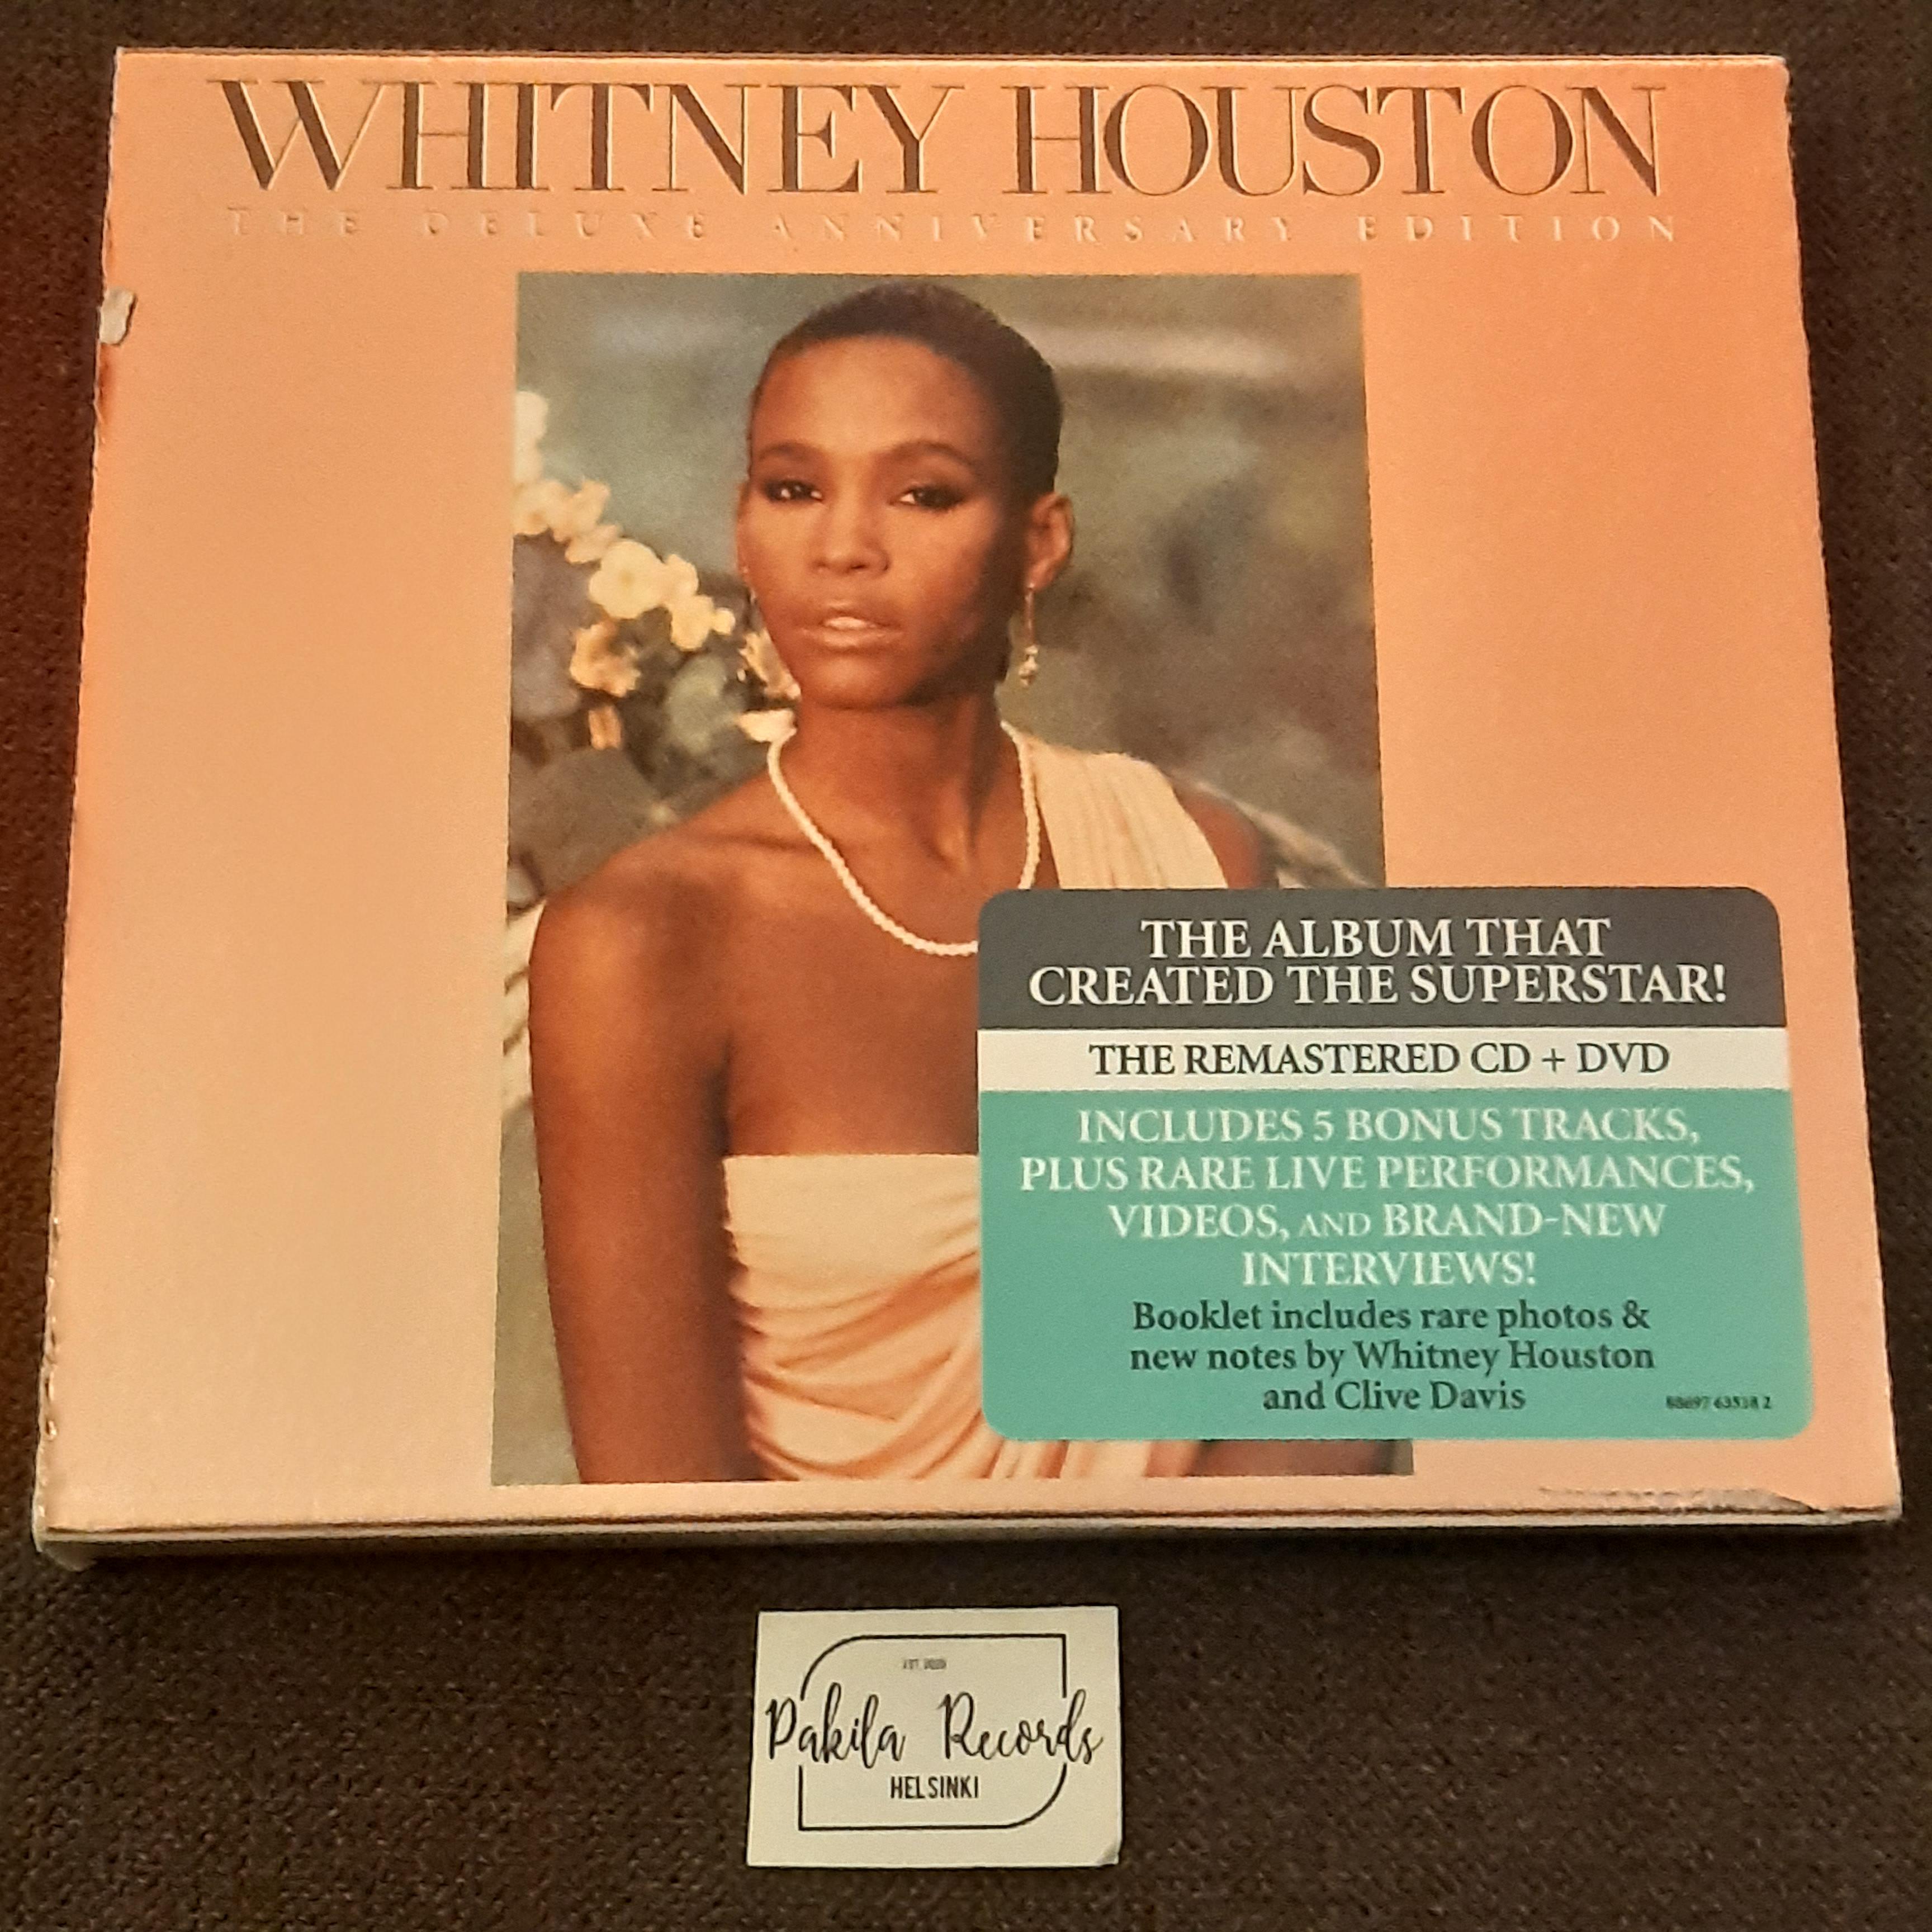 Whitney Houston - Whitney Houston, The Deluxe Anniversary Edition - CD +DVD (käytetty)